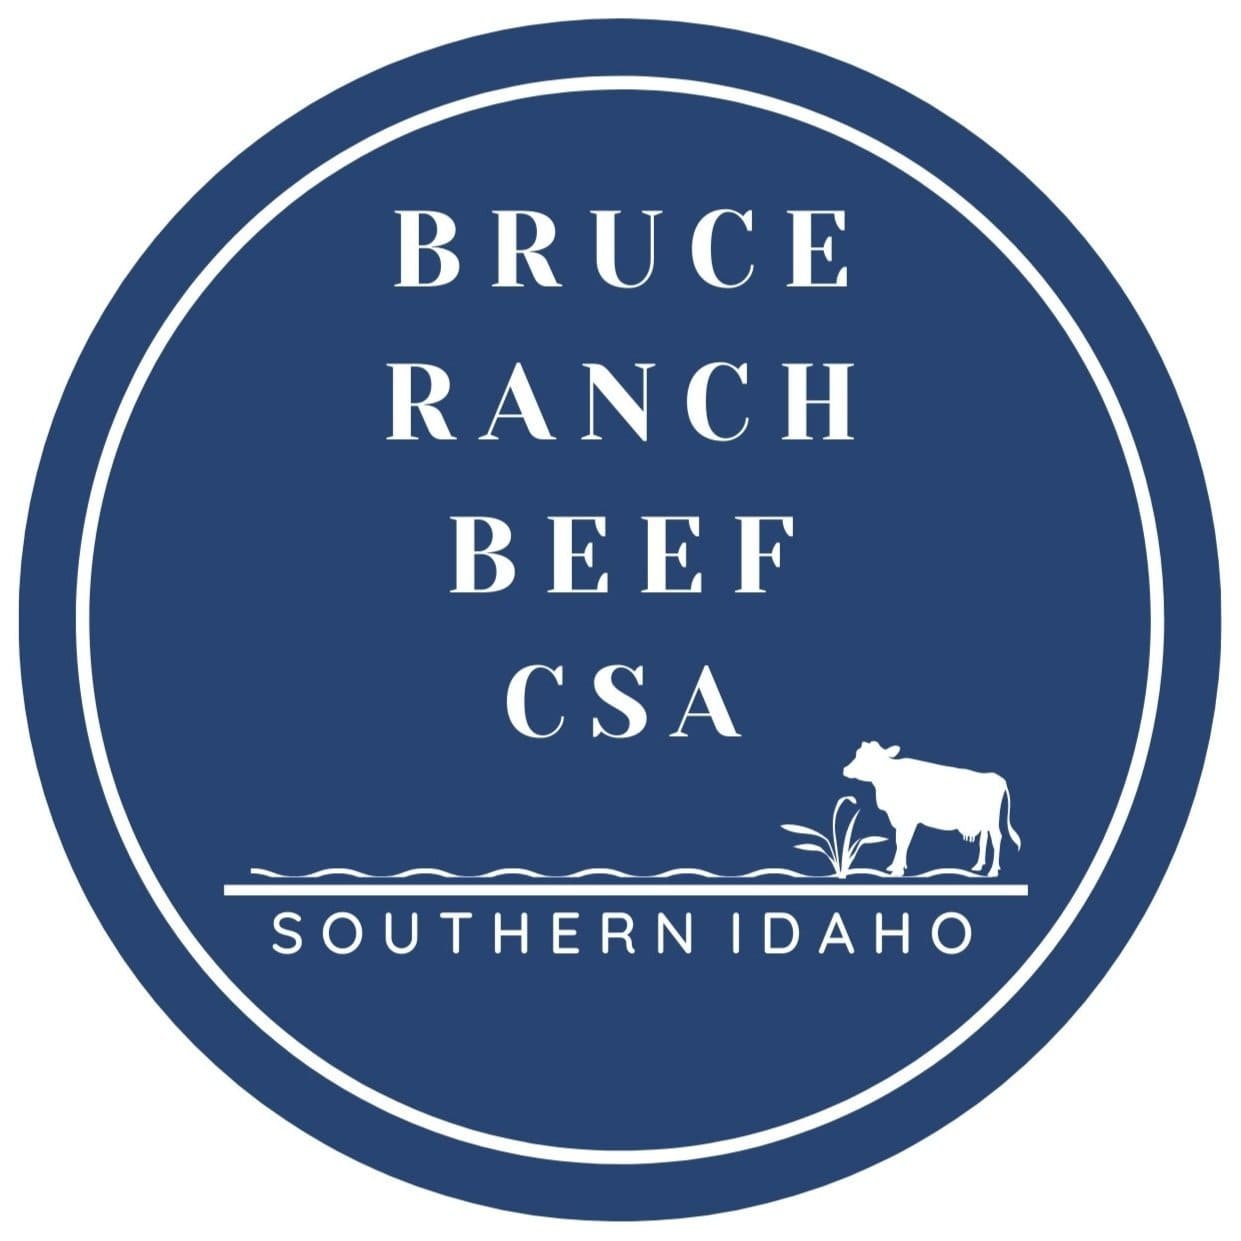 Bruce Ranch Beef CSA